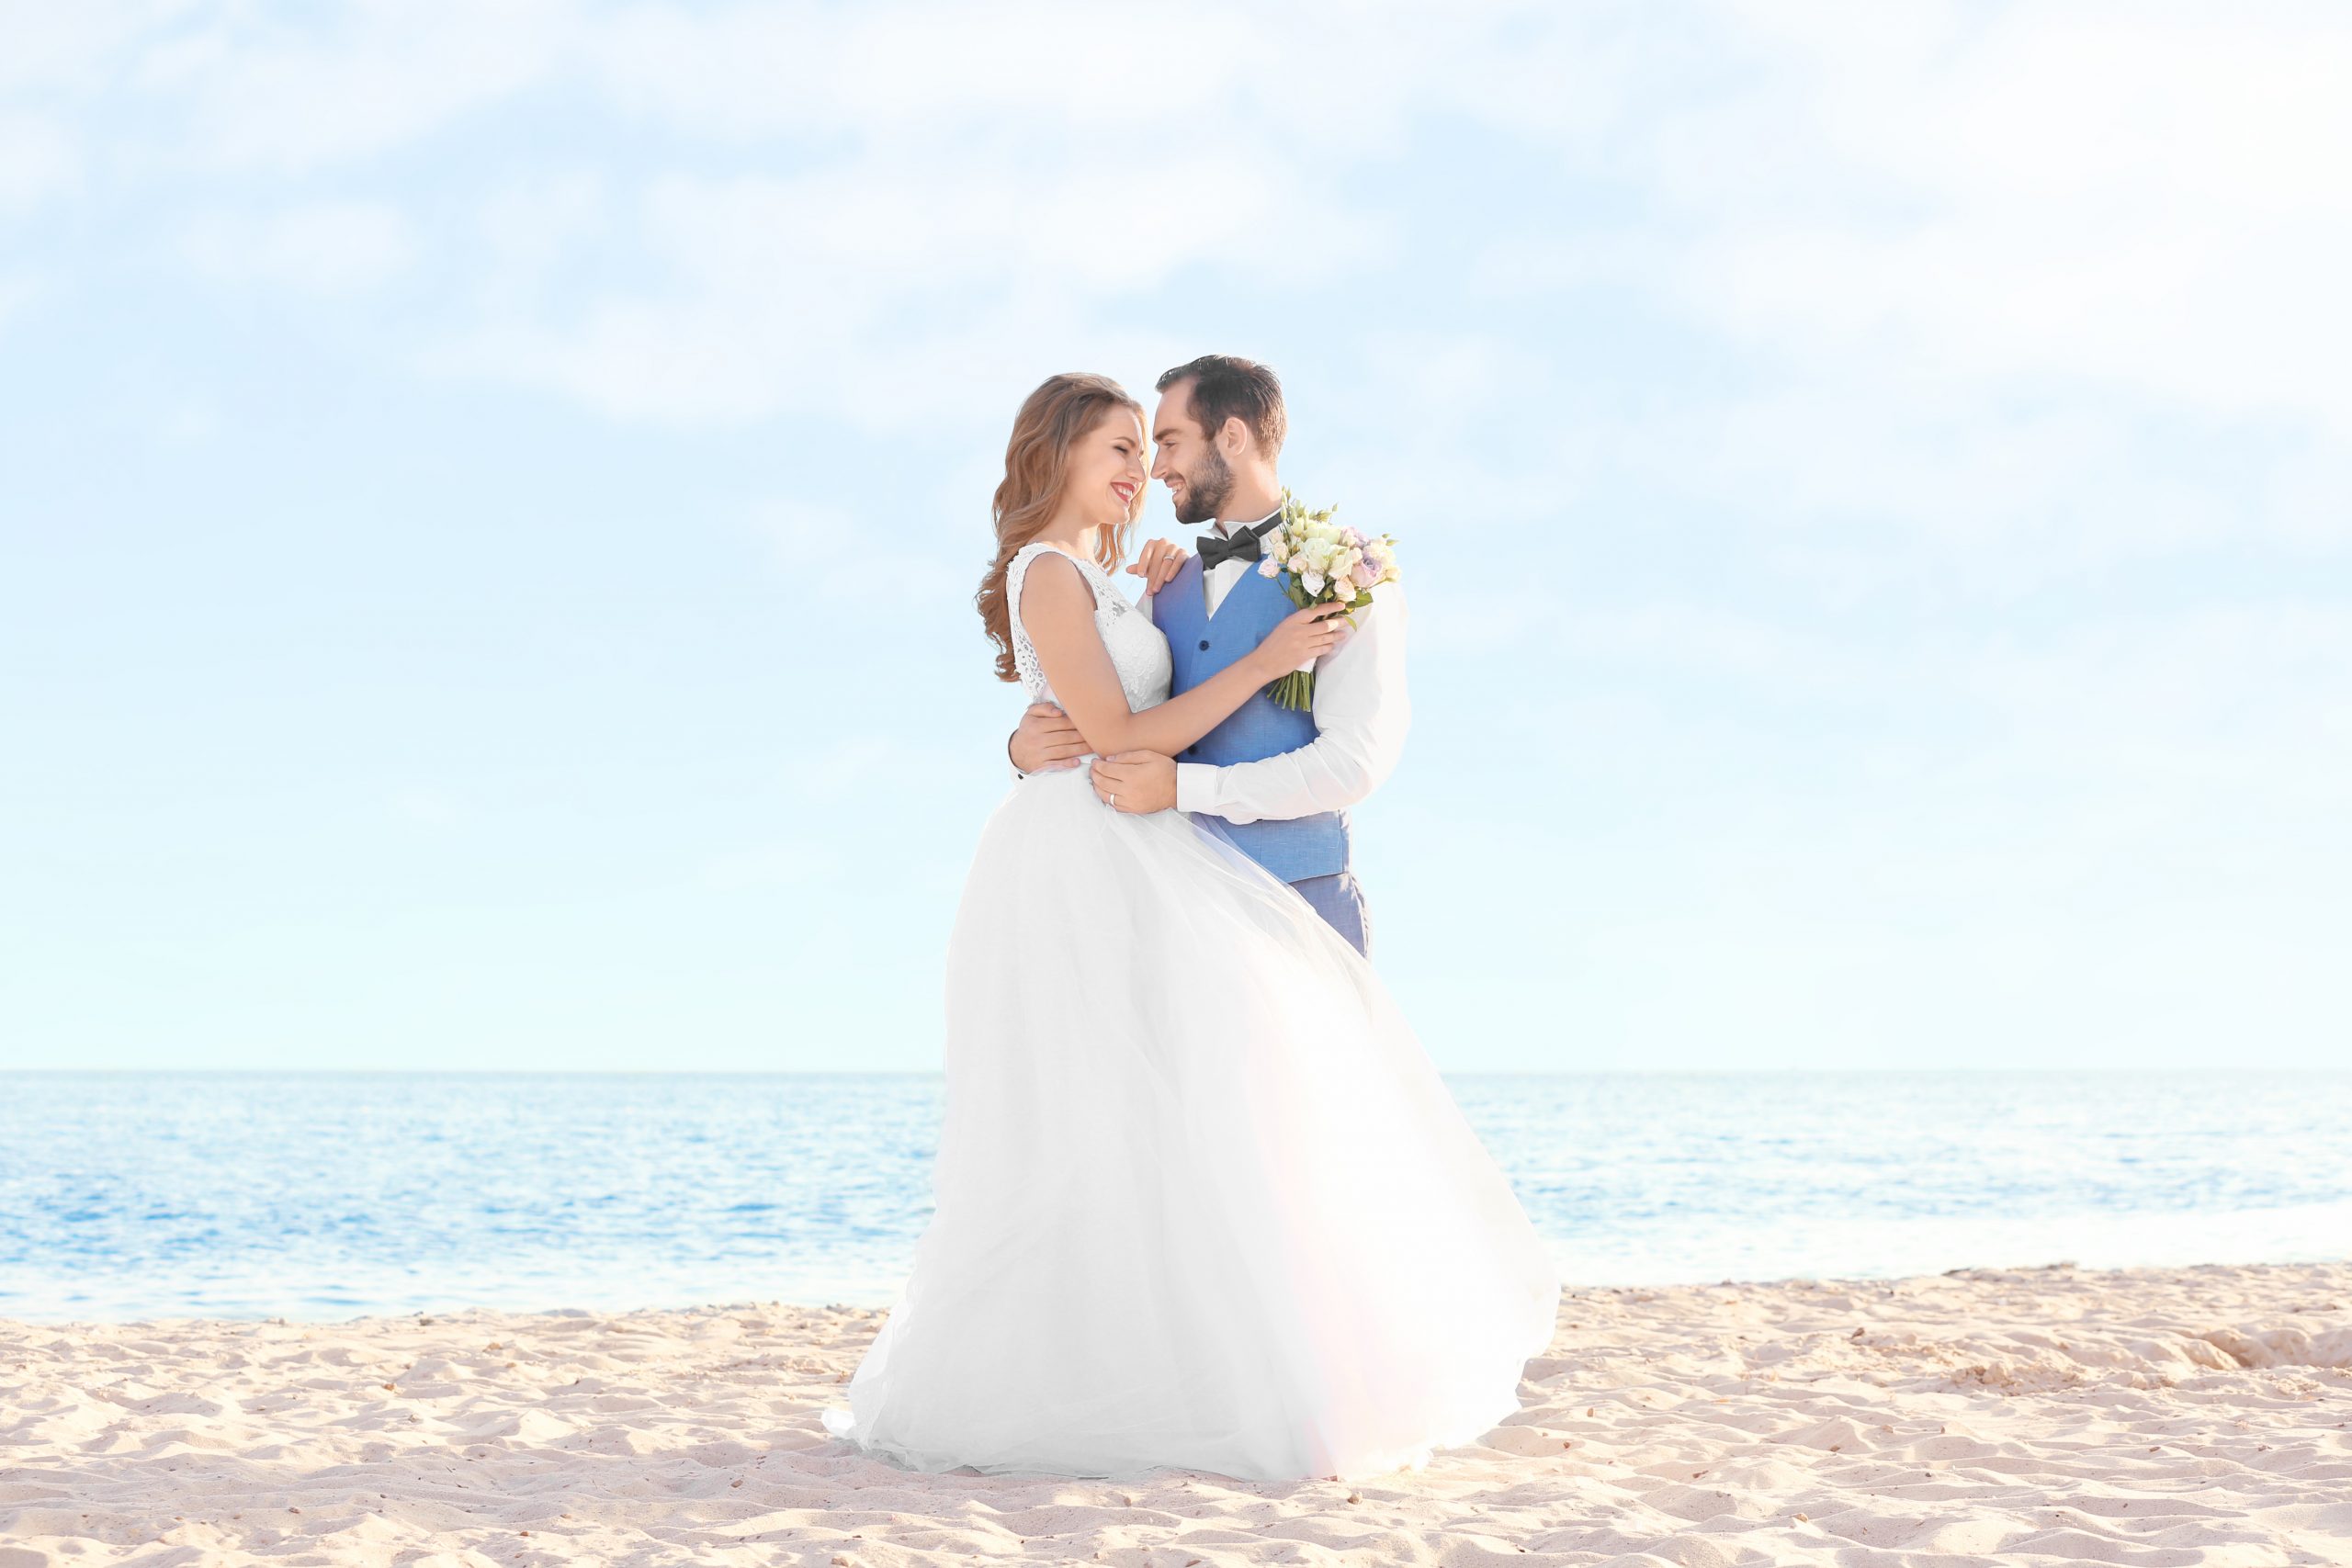 The Top 10 Caribbean Wedding Destinations